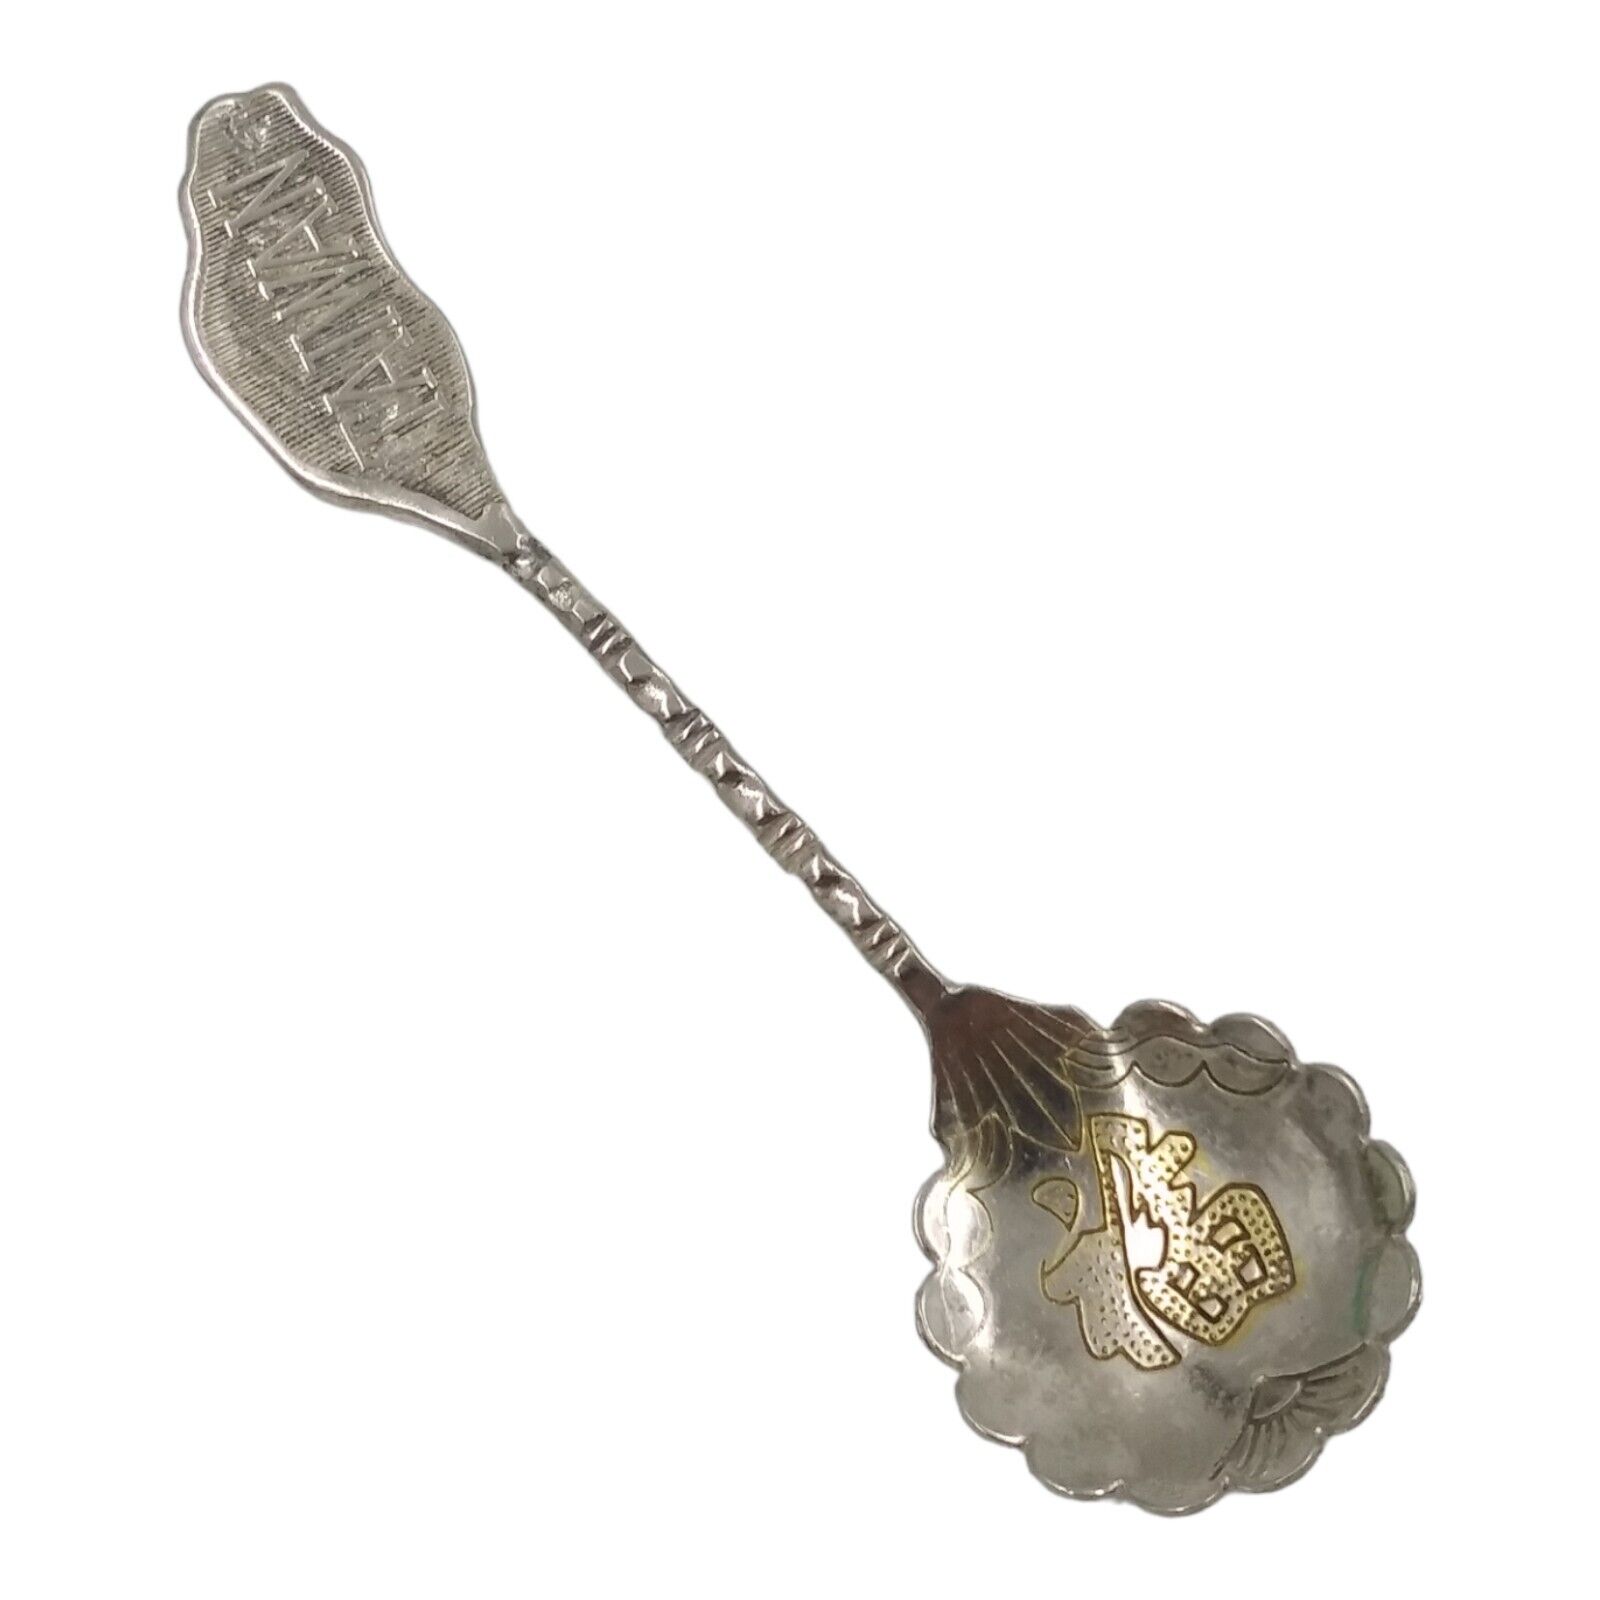 Vintage Taiwan Souvenir Spoon Collectible Figural Handle